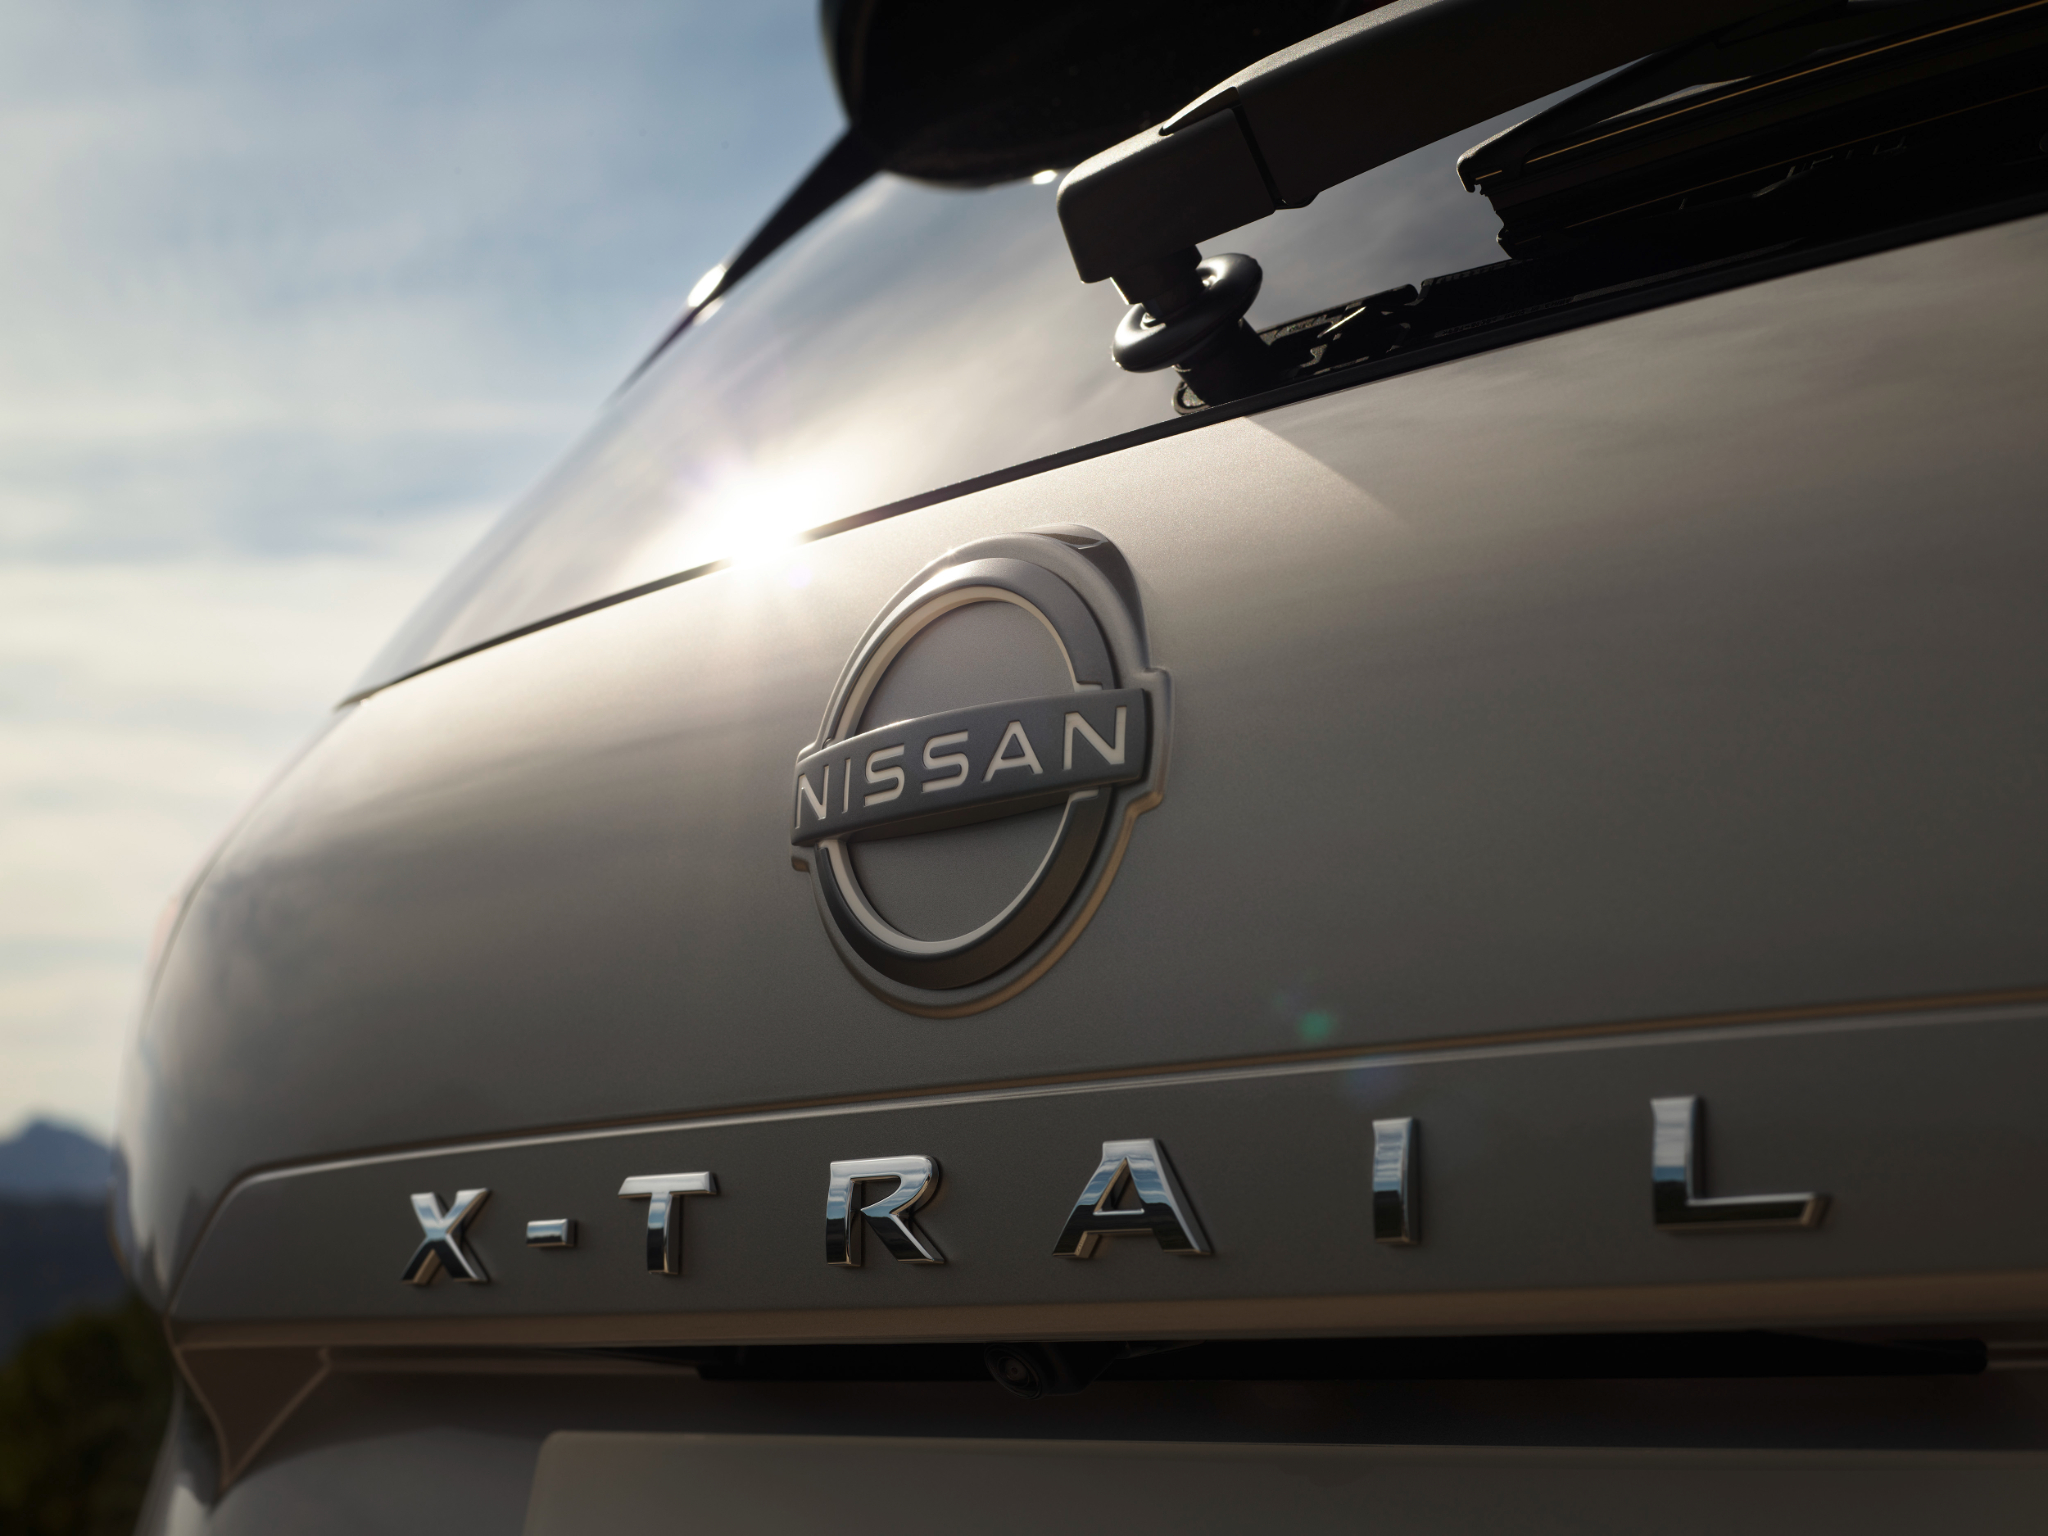 Nissan X-Trail pormenor símbolo traseira